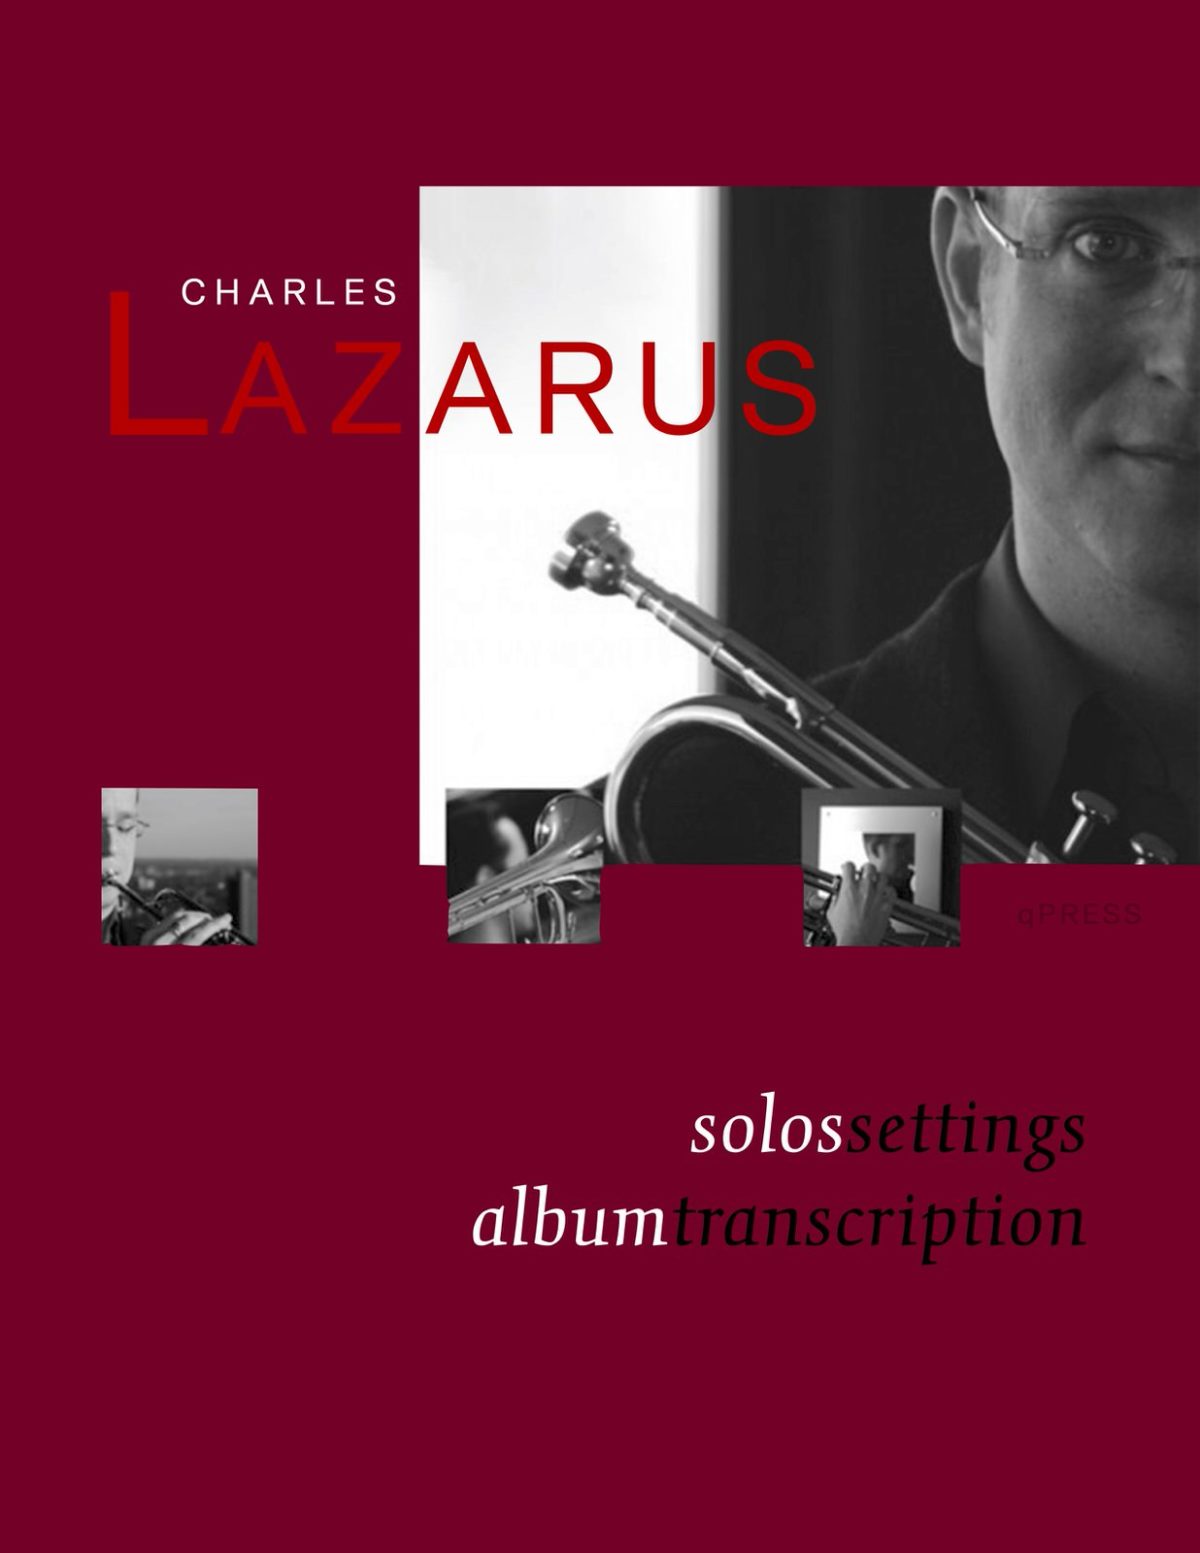 Charles Lazarus "Solo Settings" Album Transcription